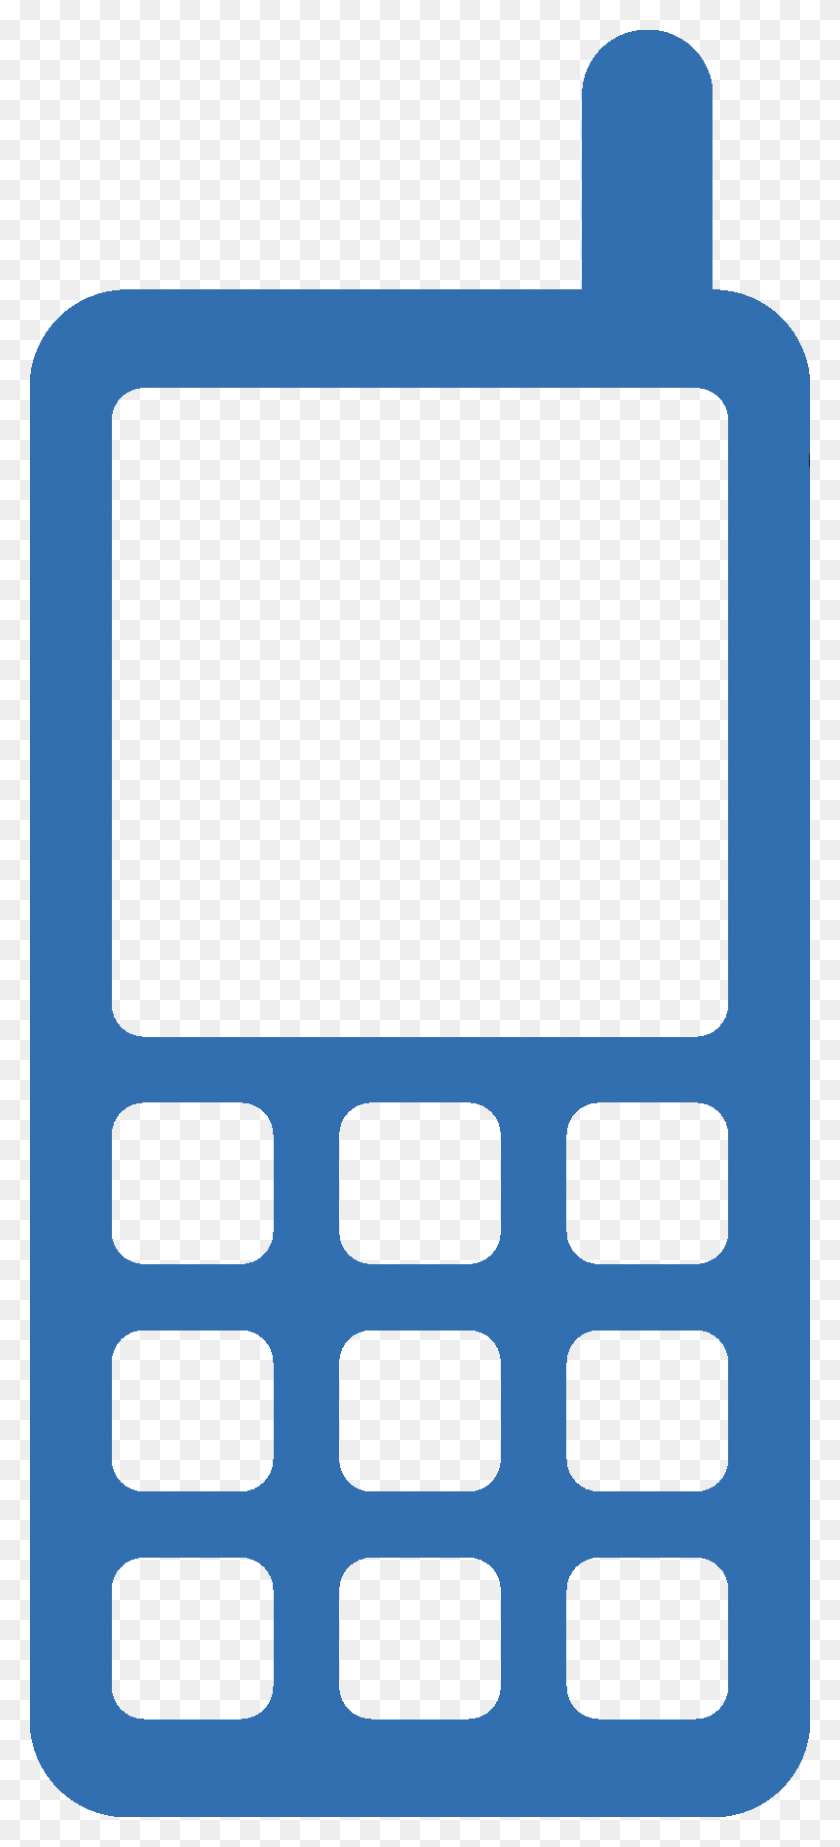 800x1833 Descargar Png Lápiz De Teléfono Celular Verde Y En Color Azul Icono De Teléfono Celular, Cruz, Símbolo, Cara Hd Png